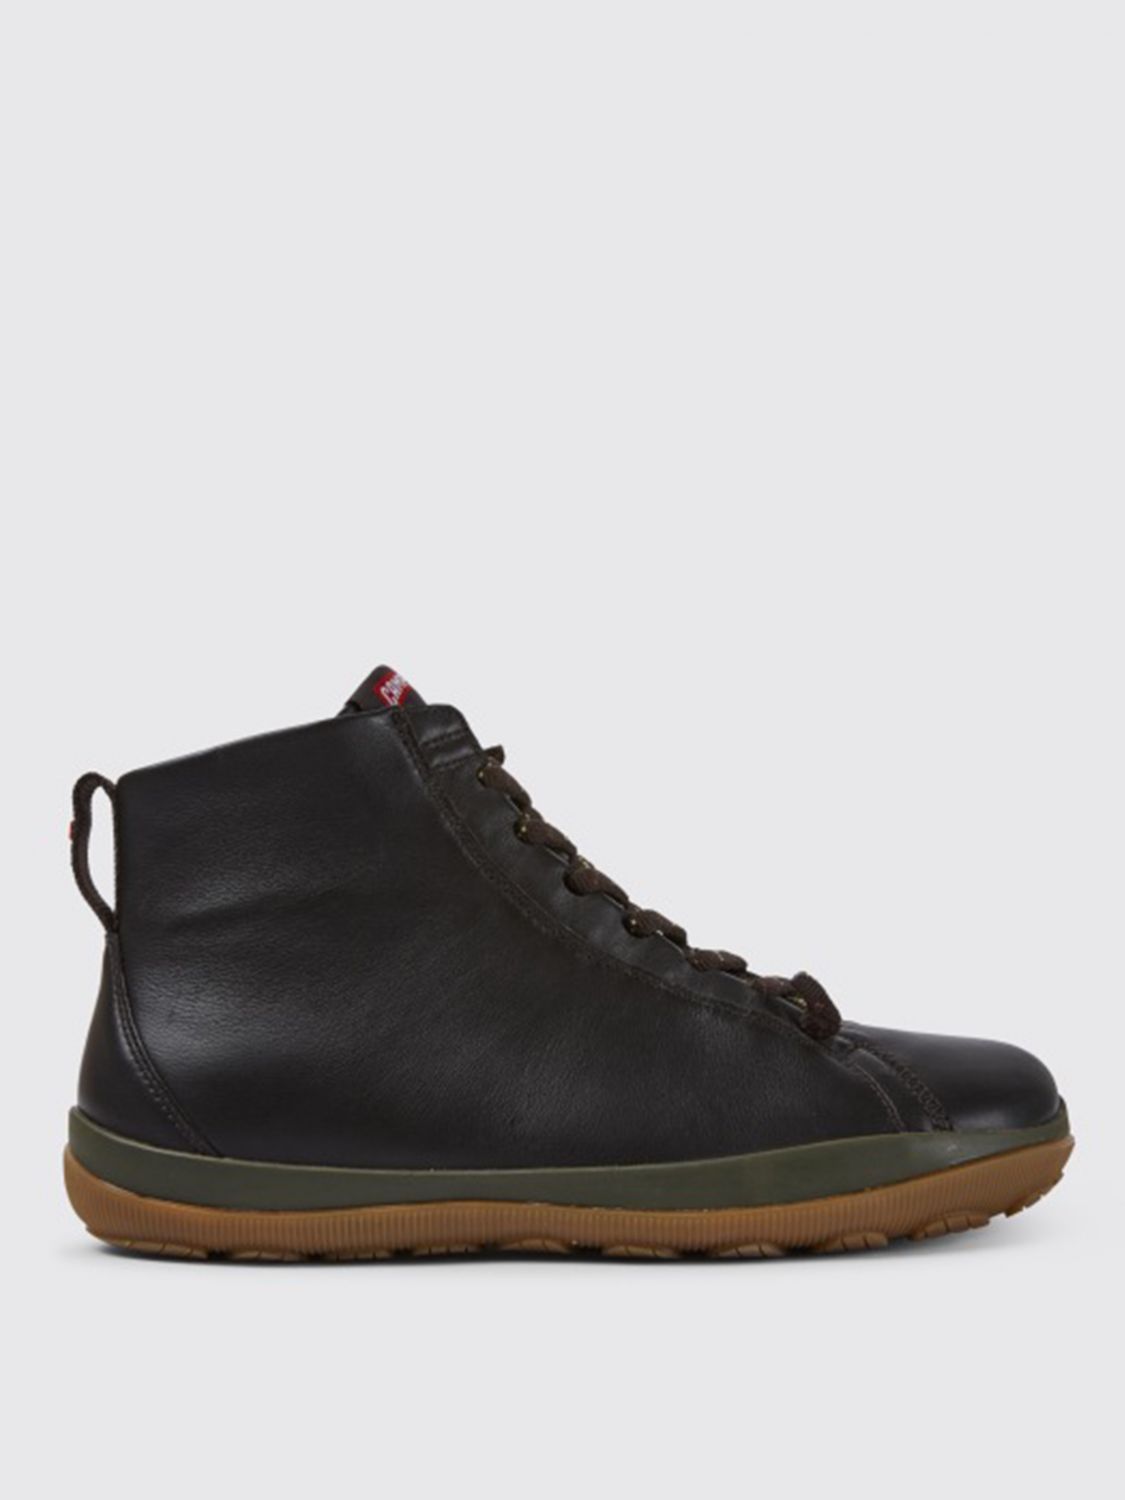 CAMPER: Pista sneakers in calfskin - Brown | Camper sneakers K300287-013 PEU PISTA online on GIGLIO.COM